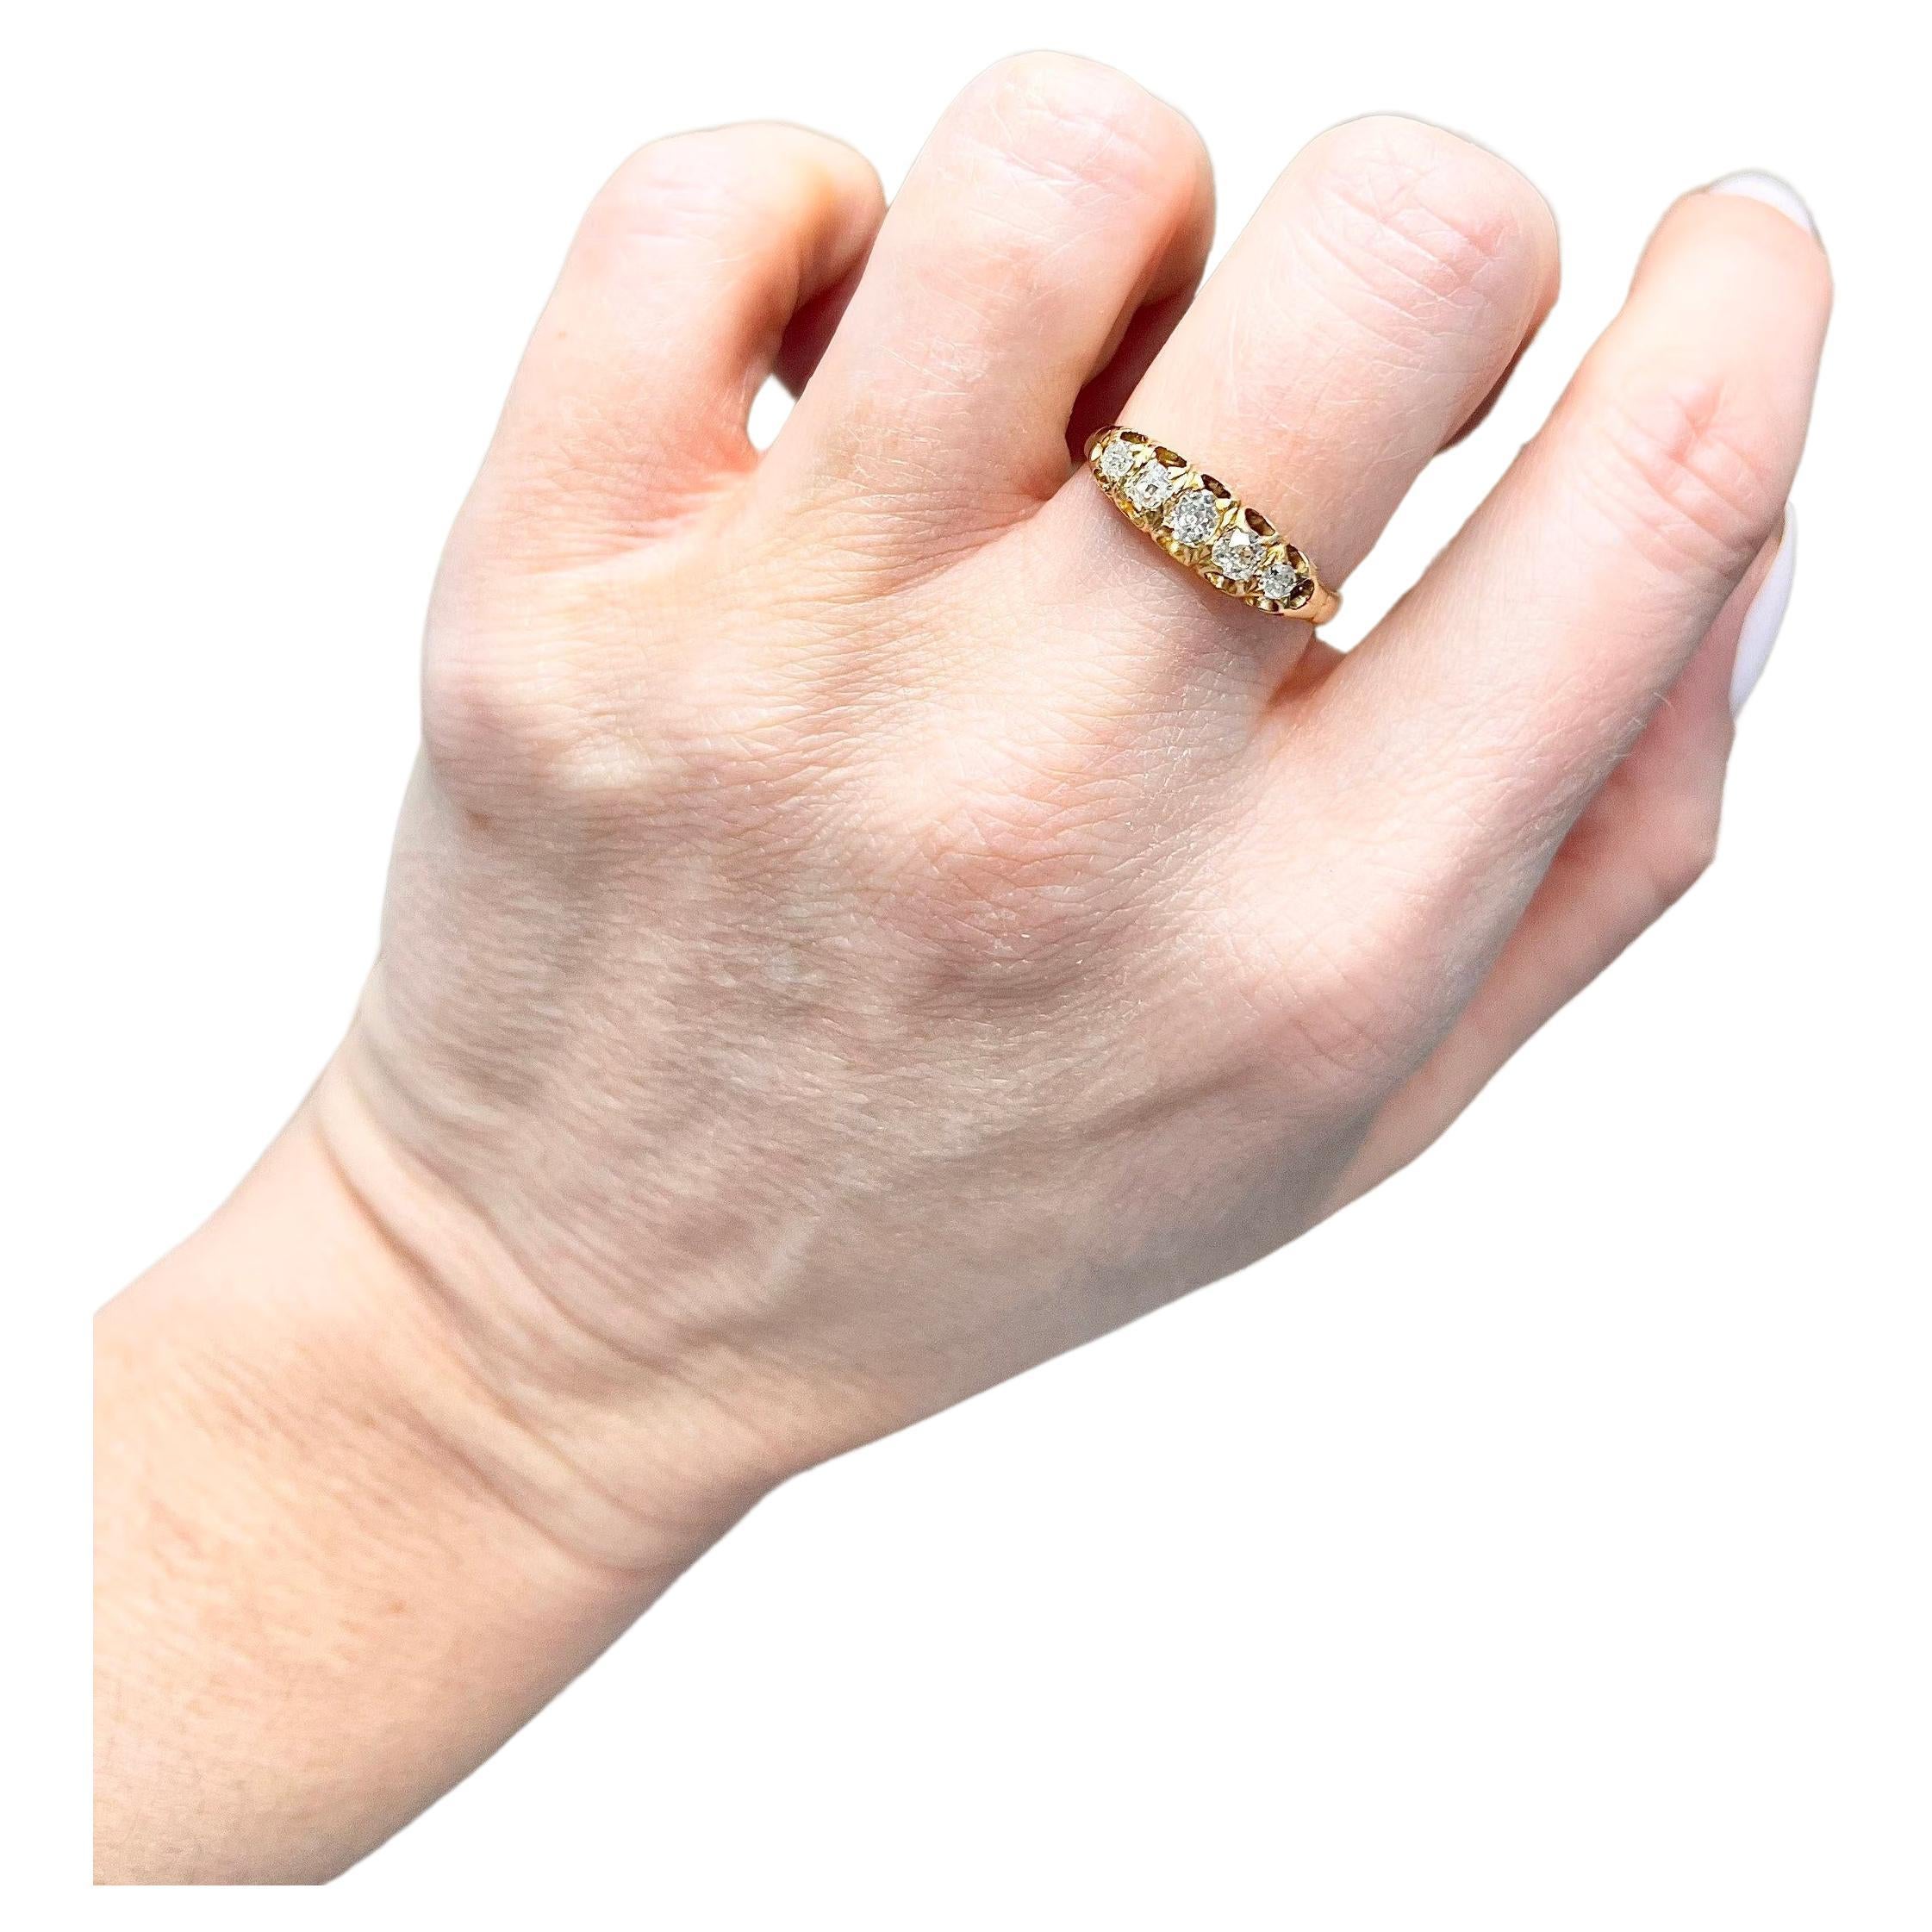 Antiguo anillo victoriano de oro de 18 ct con cinco diamantes